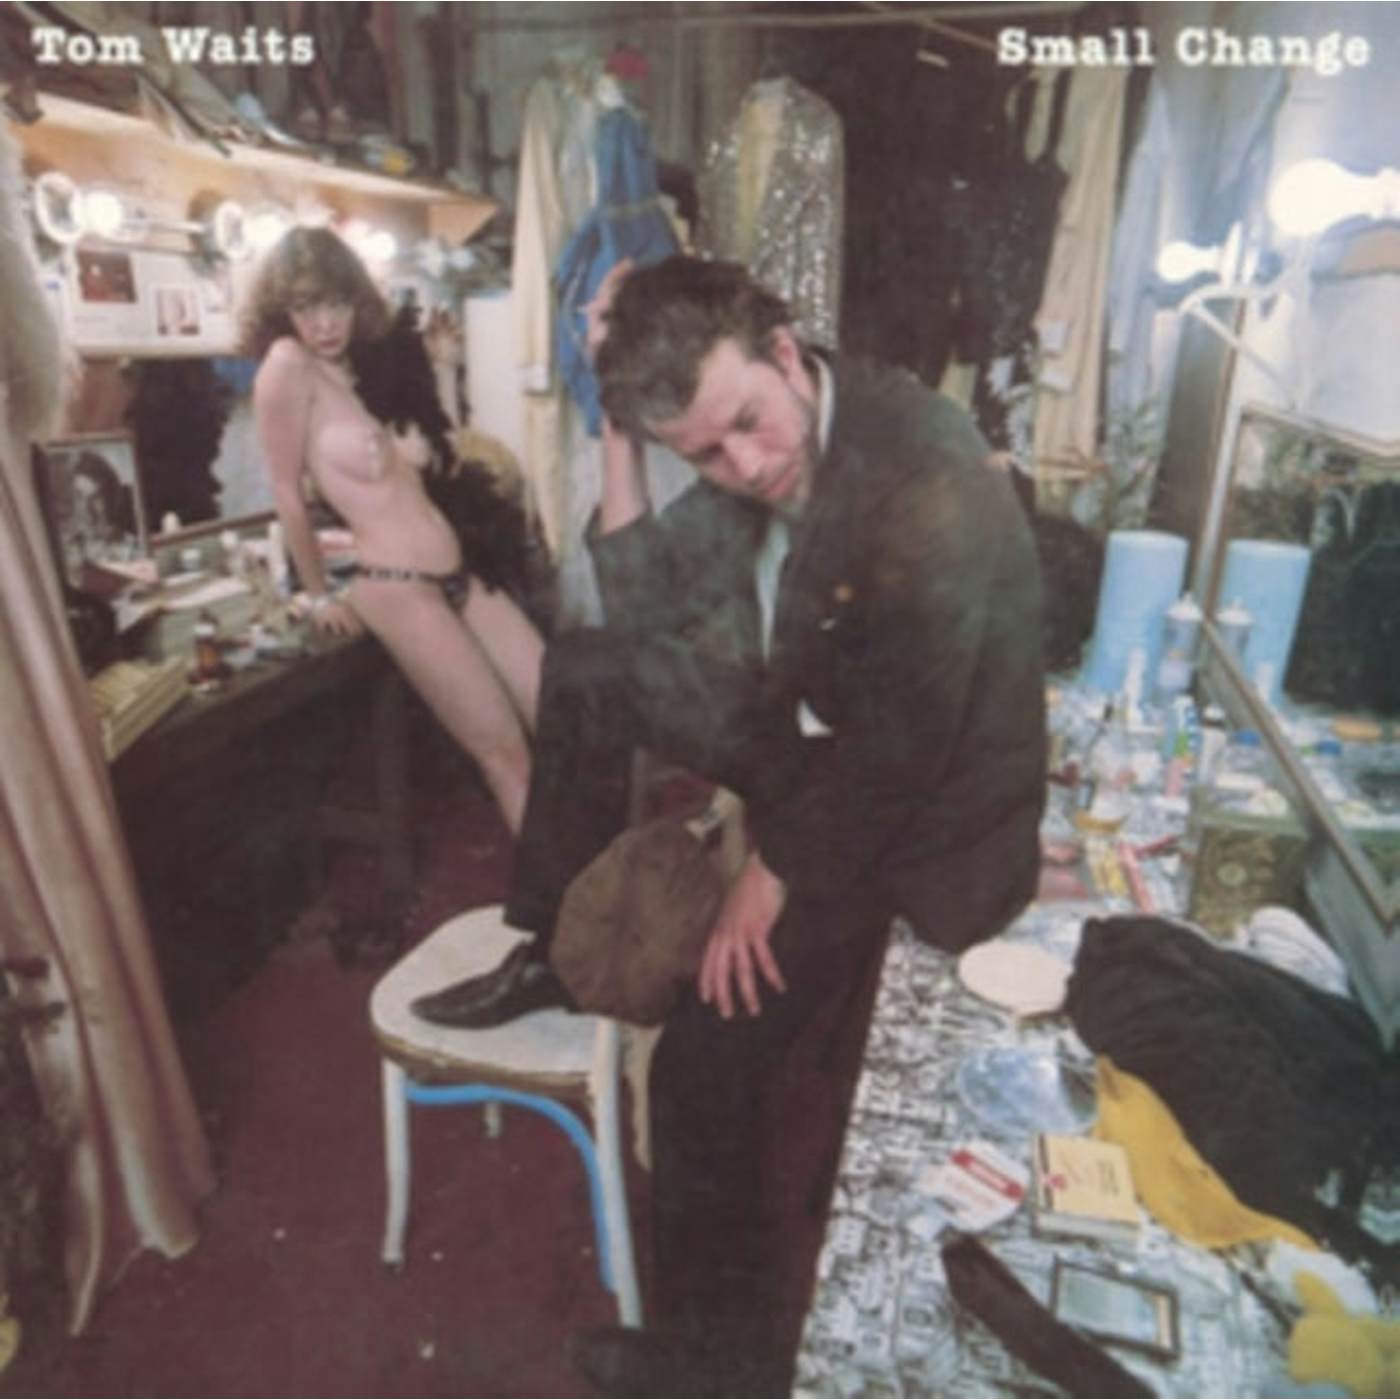 Tom Waits LP Vinyl Record - Small Change